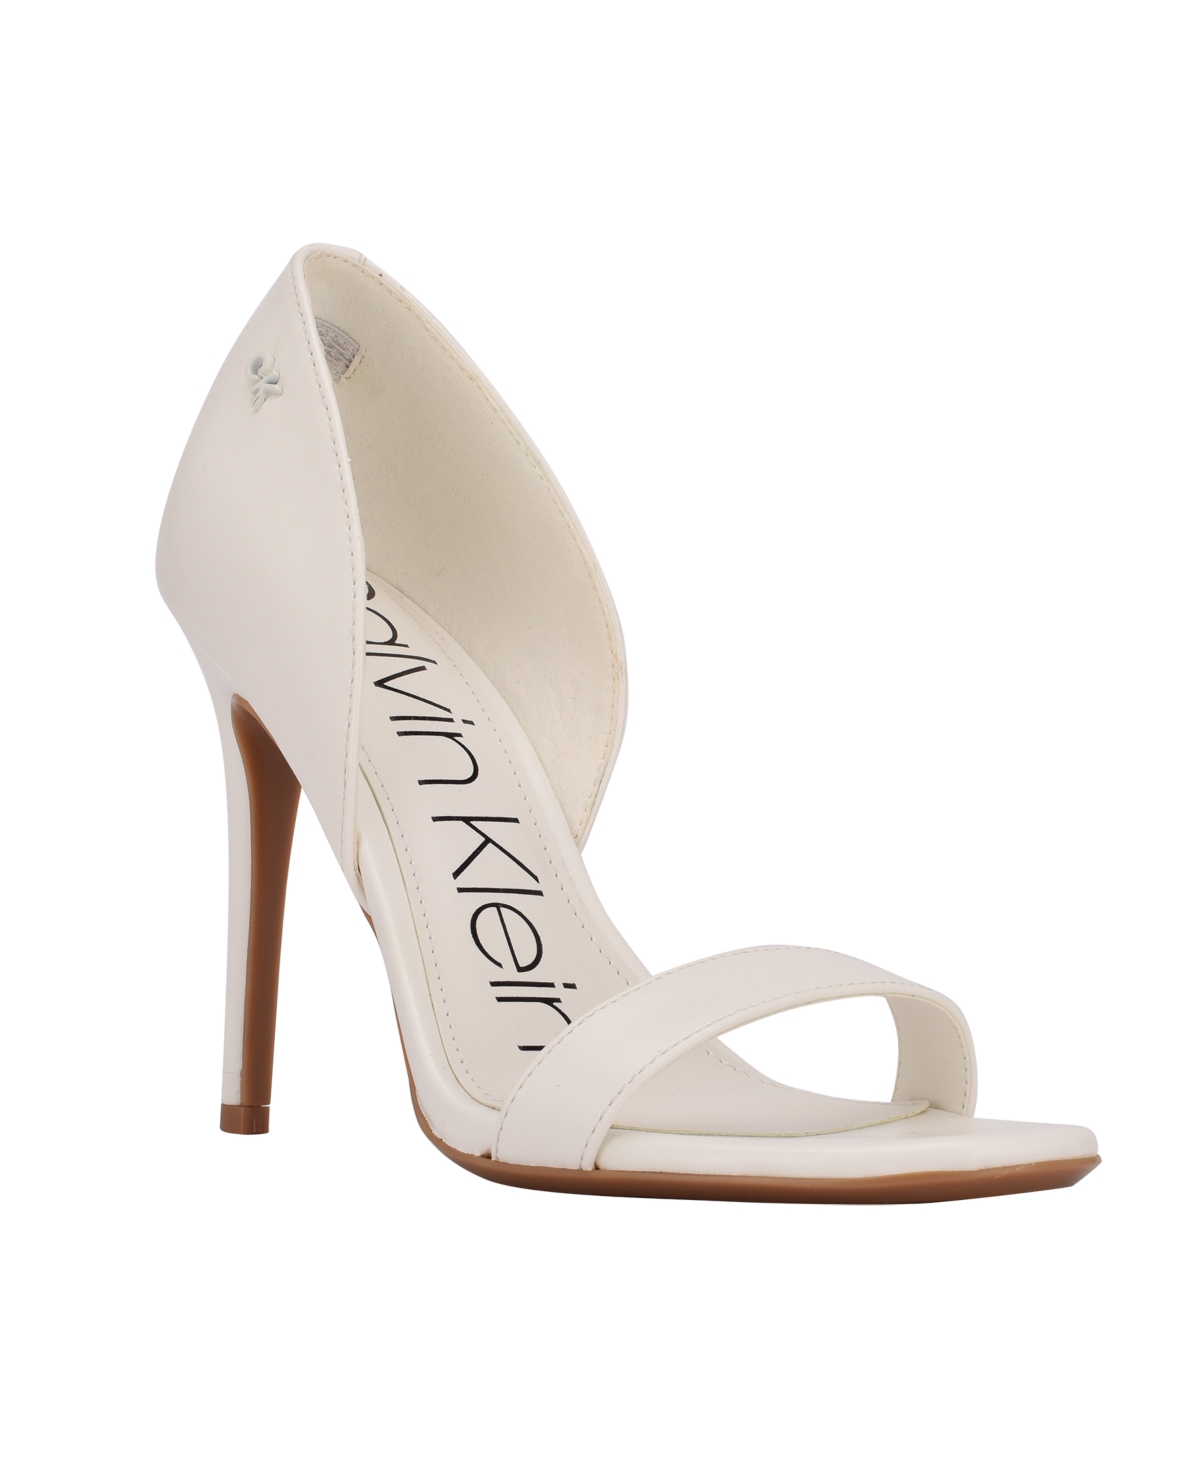 Calvin Klein Women's Metino Toe Stiletto Dress Sandals Reviews - Sandals - Shoes - Macy's